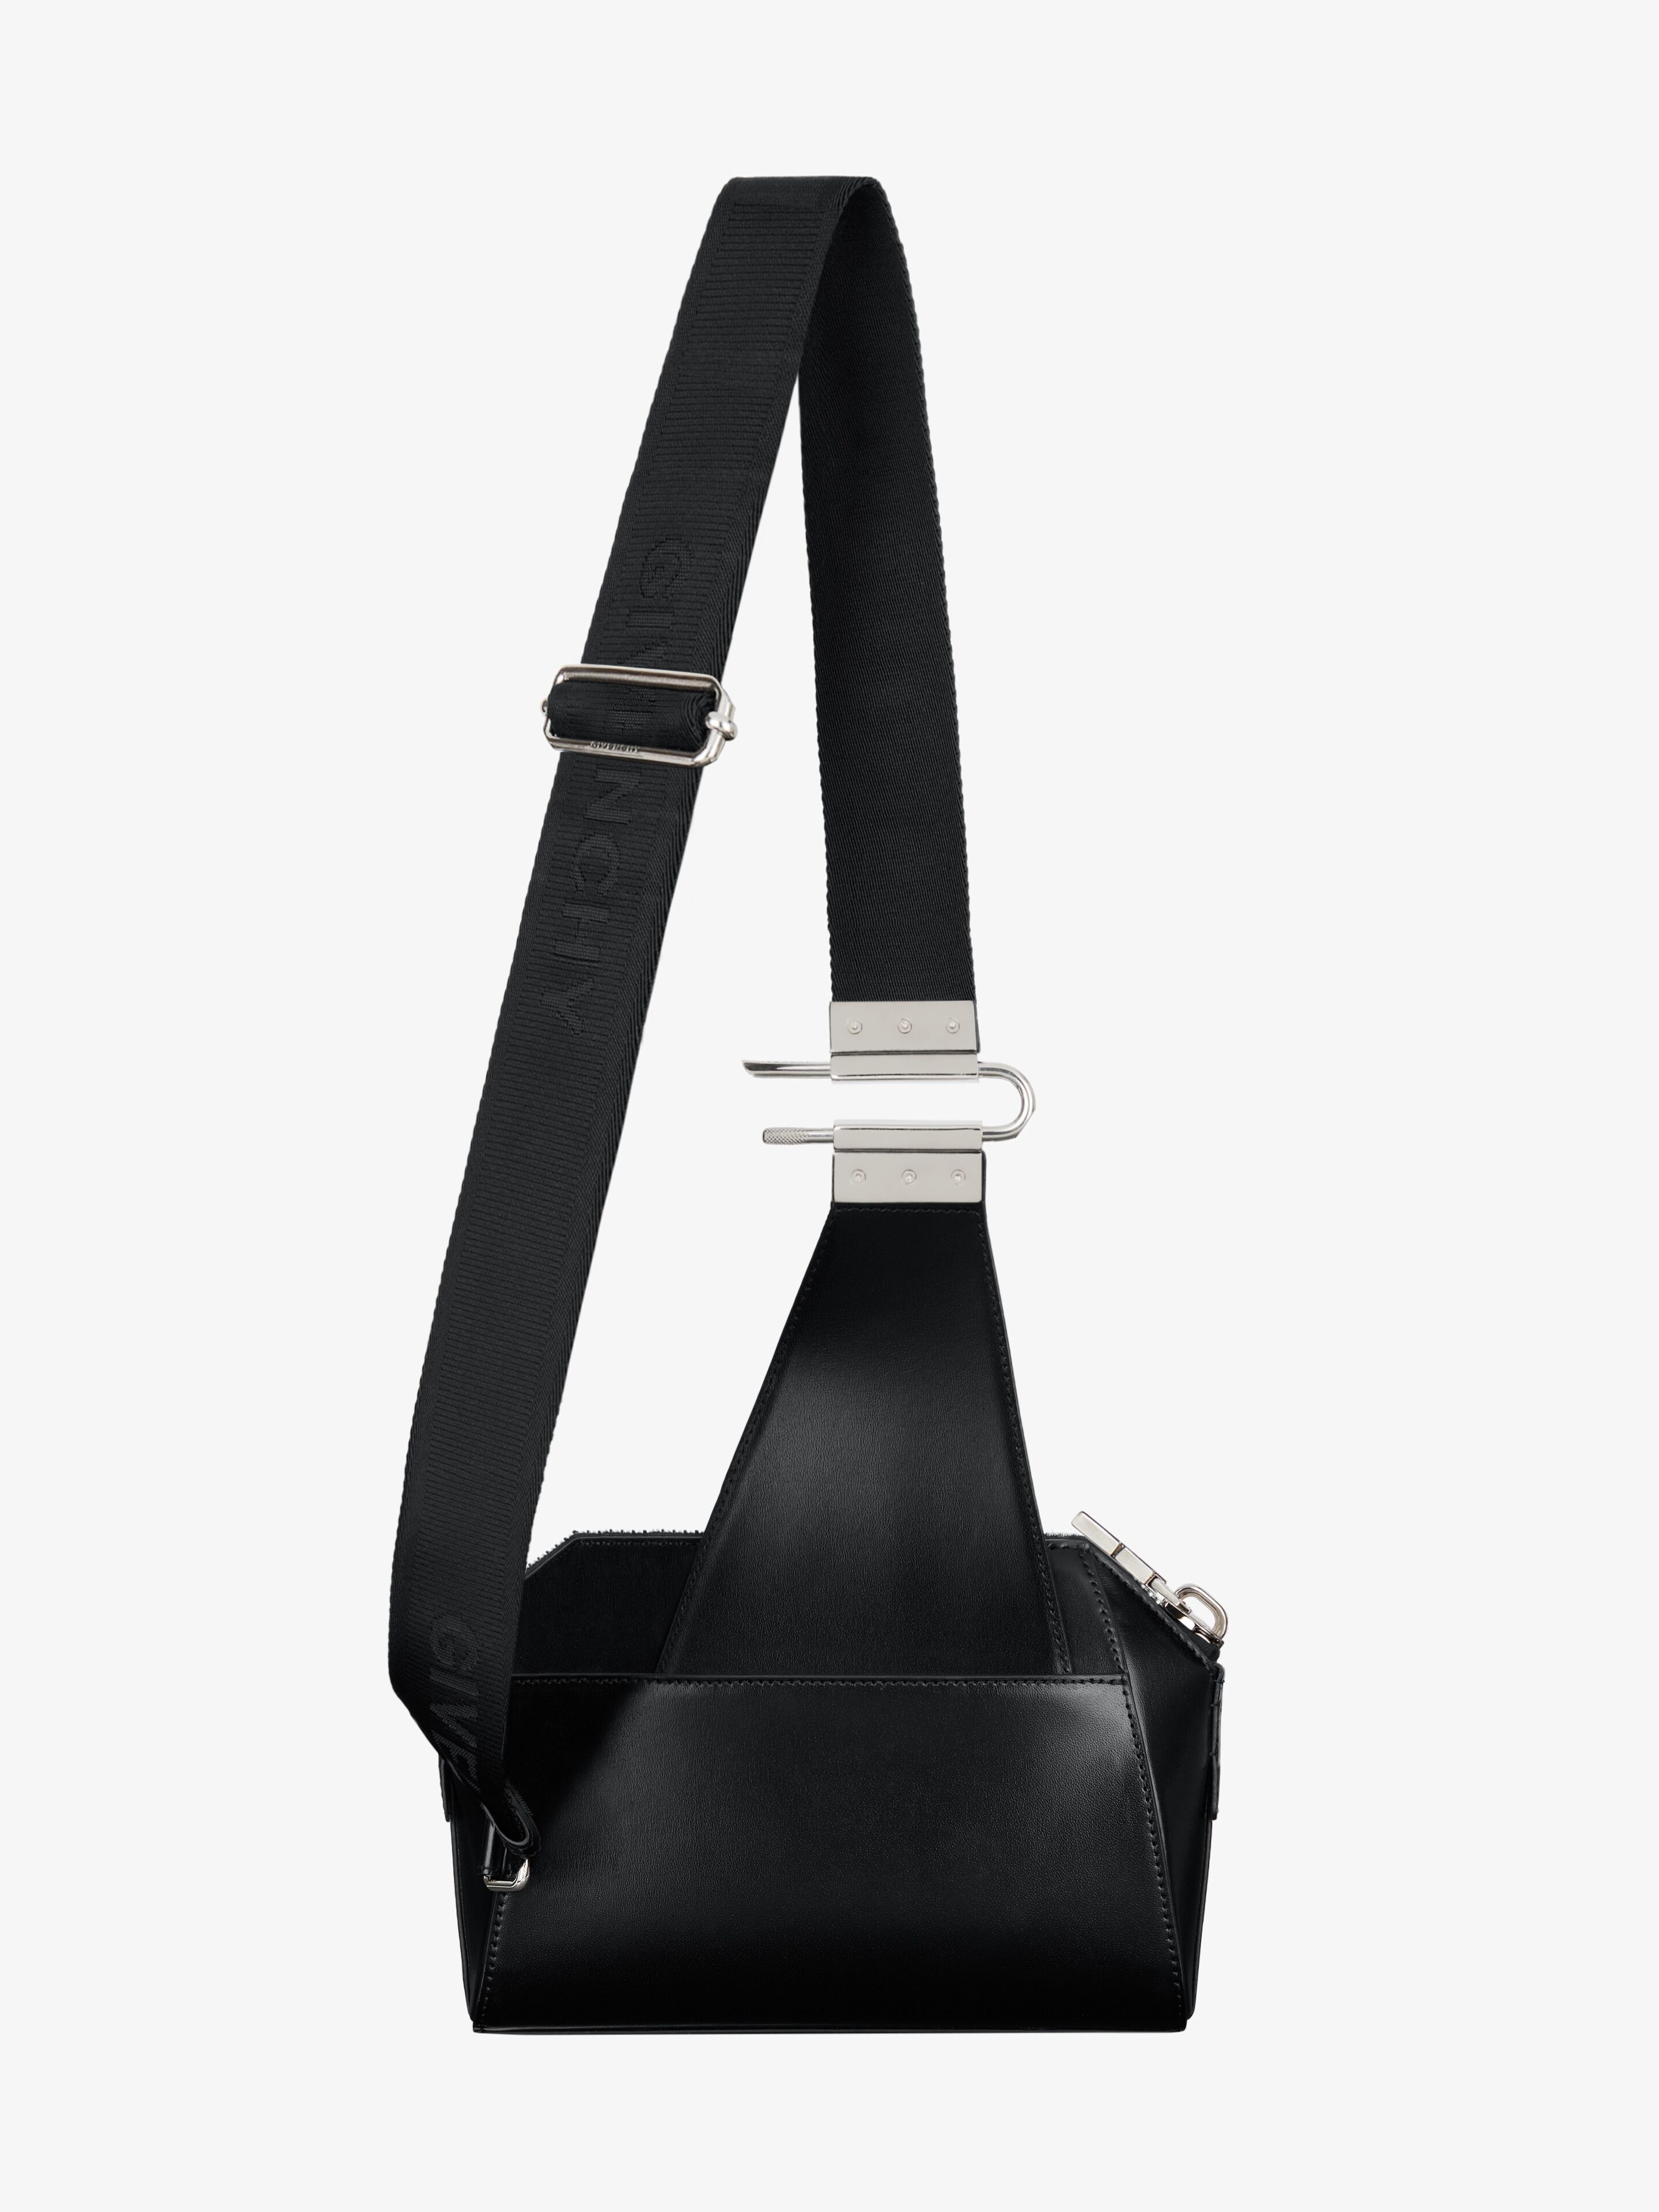 Givenchy ANTIGONA U BAG IN BOX LEATHER | REVERSIBLE